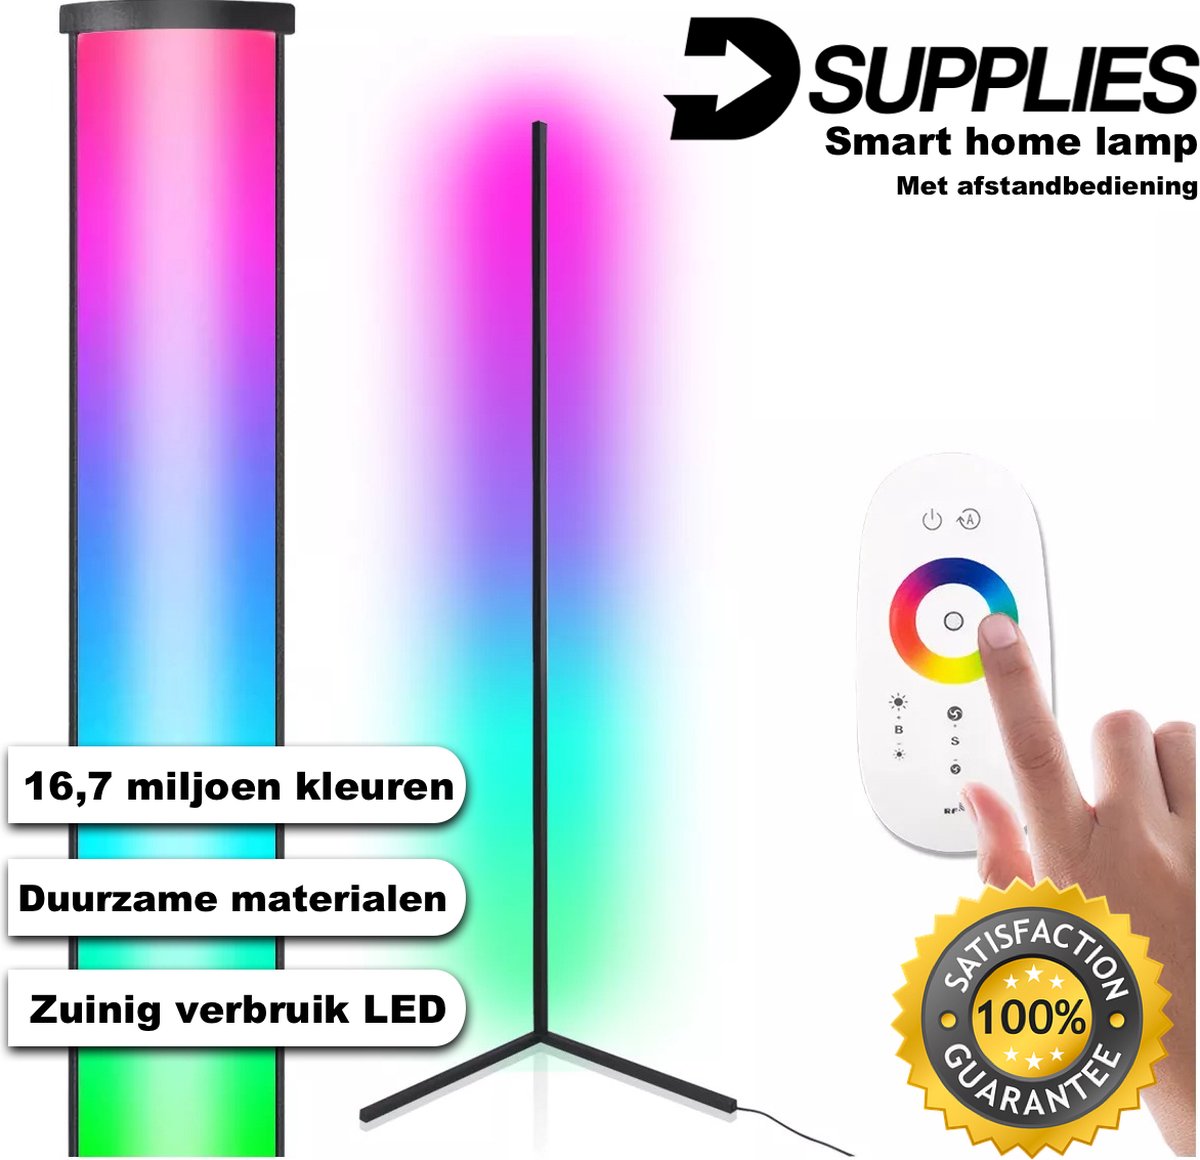 D-Supplies LED hoeklamp - Afstandsbediening - RGB lamp - Warm wit - Hoeklamp